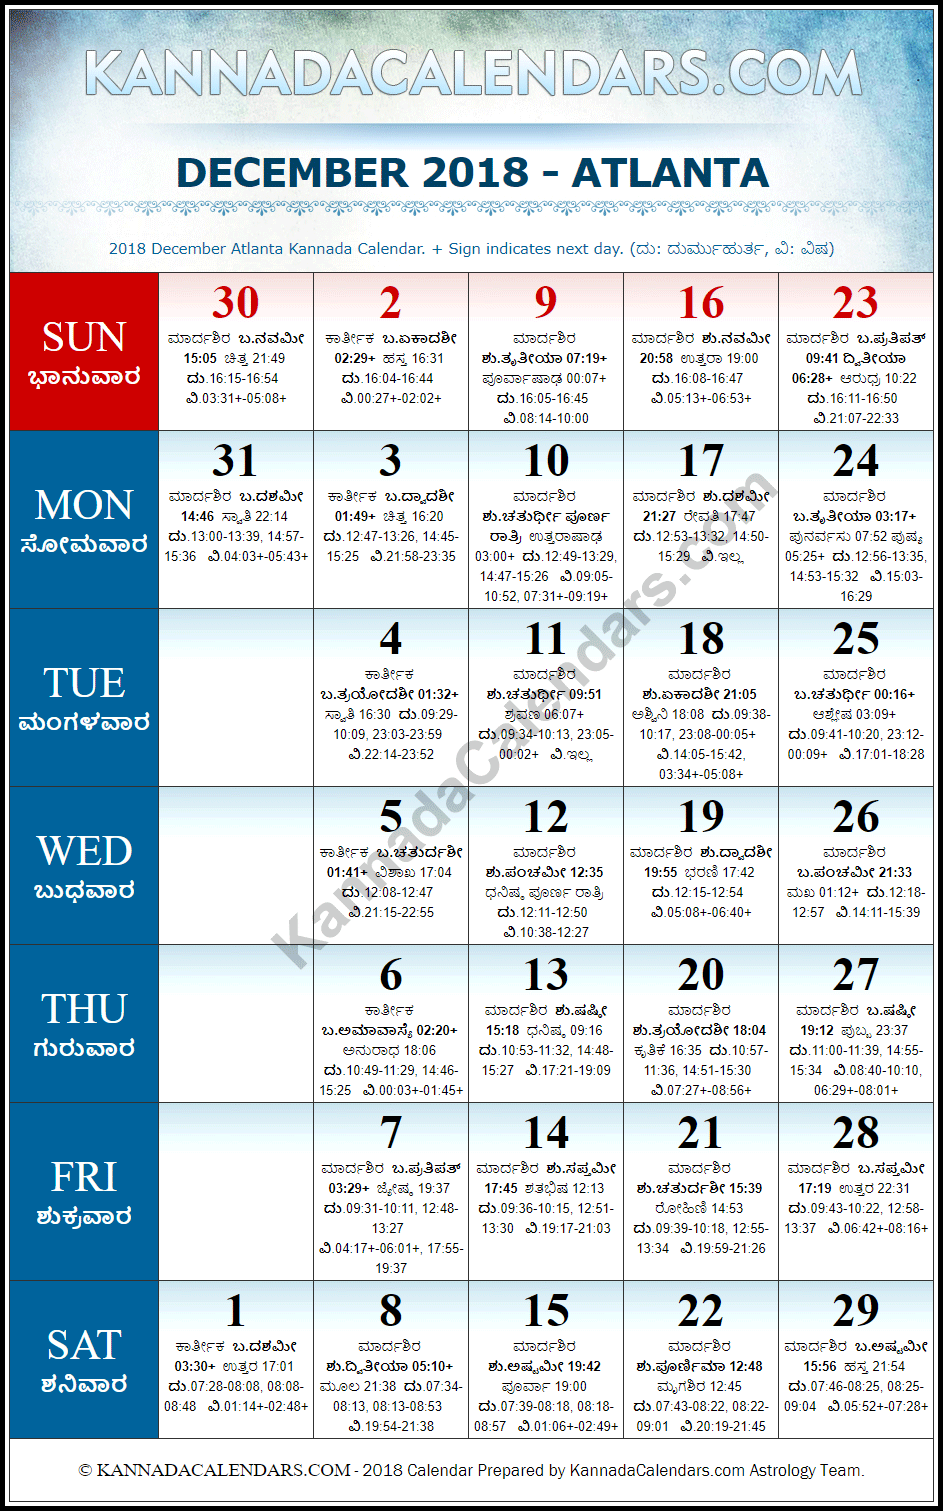 December 2018 Kannada Calendar for Atlanta, USA